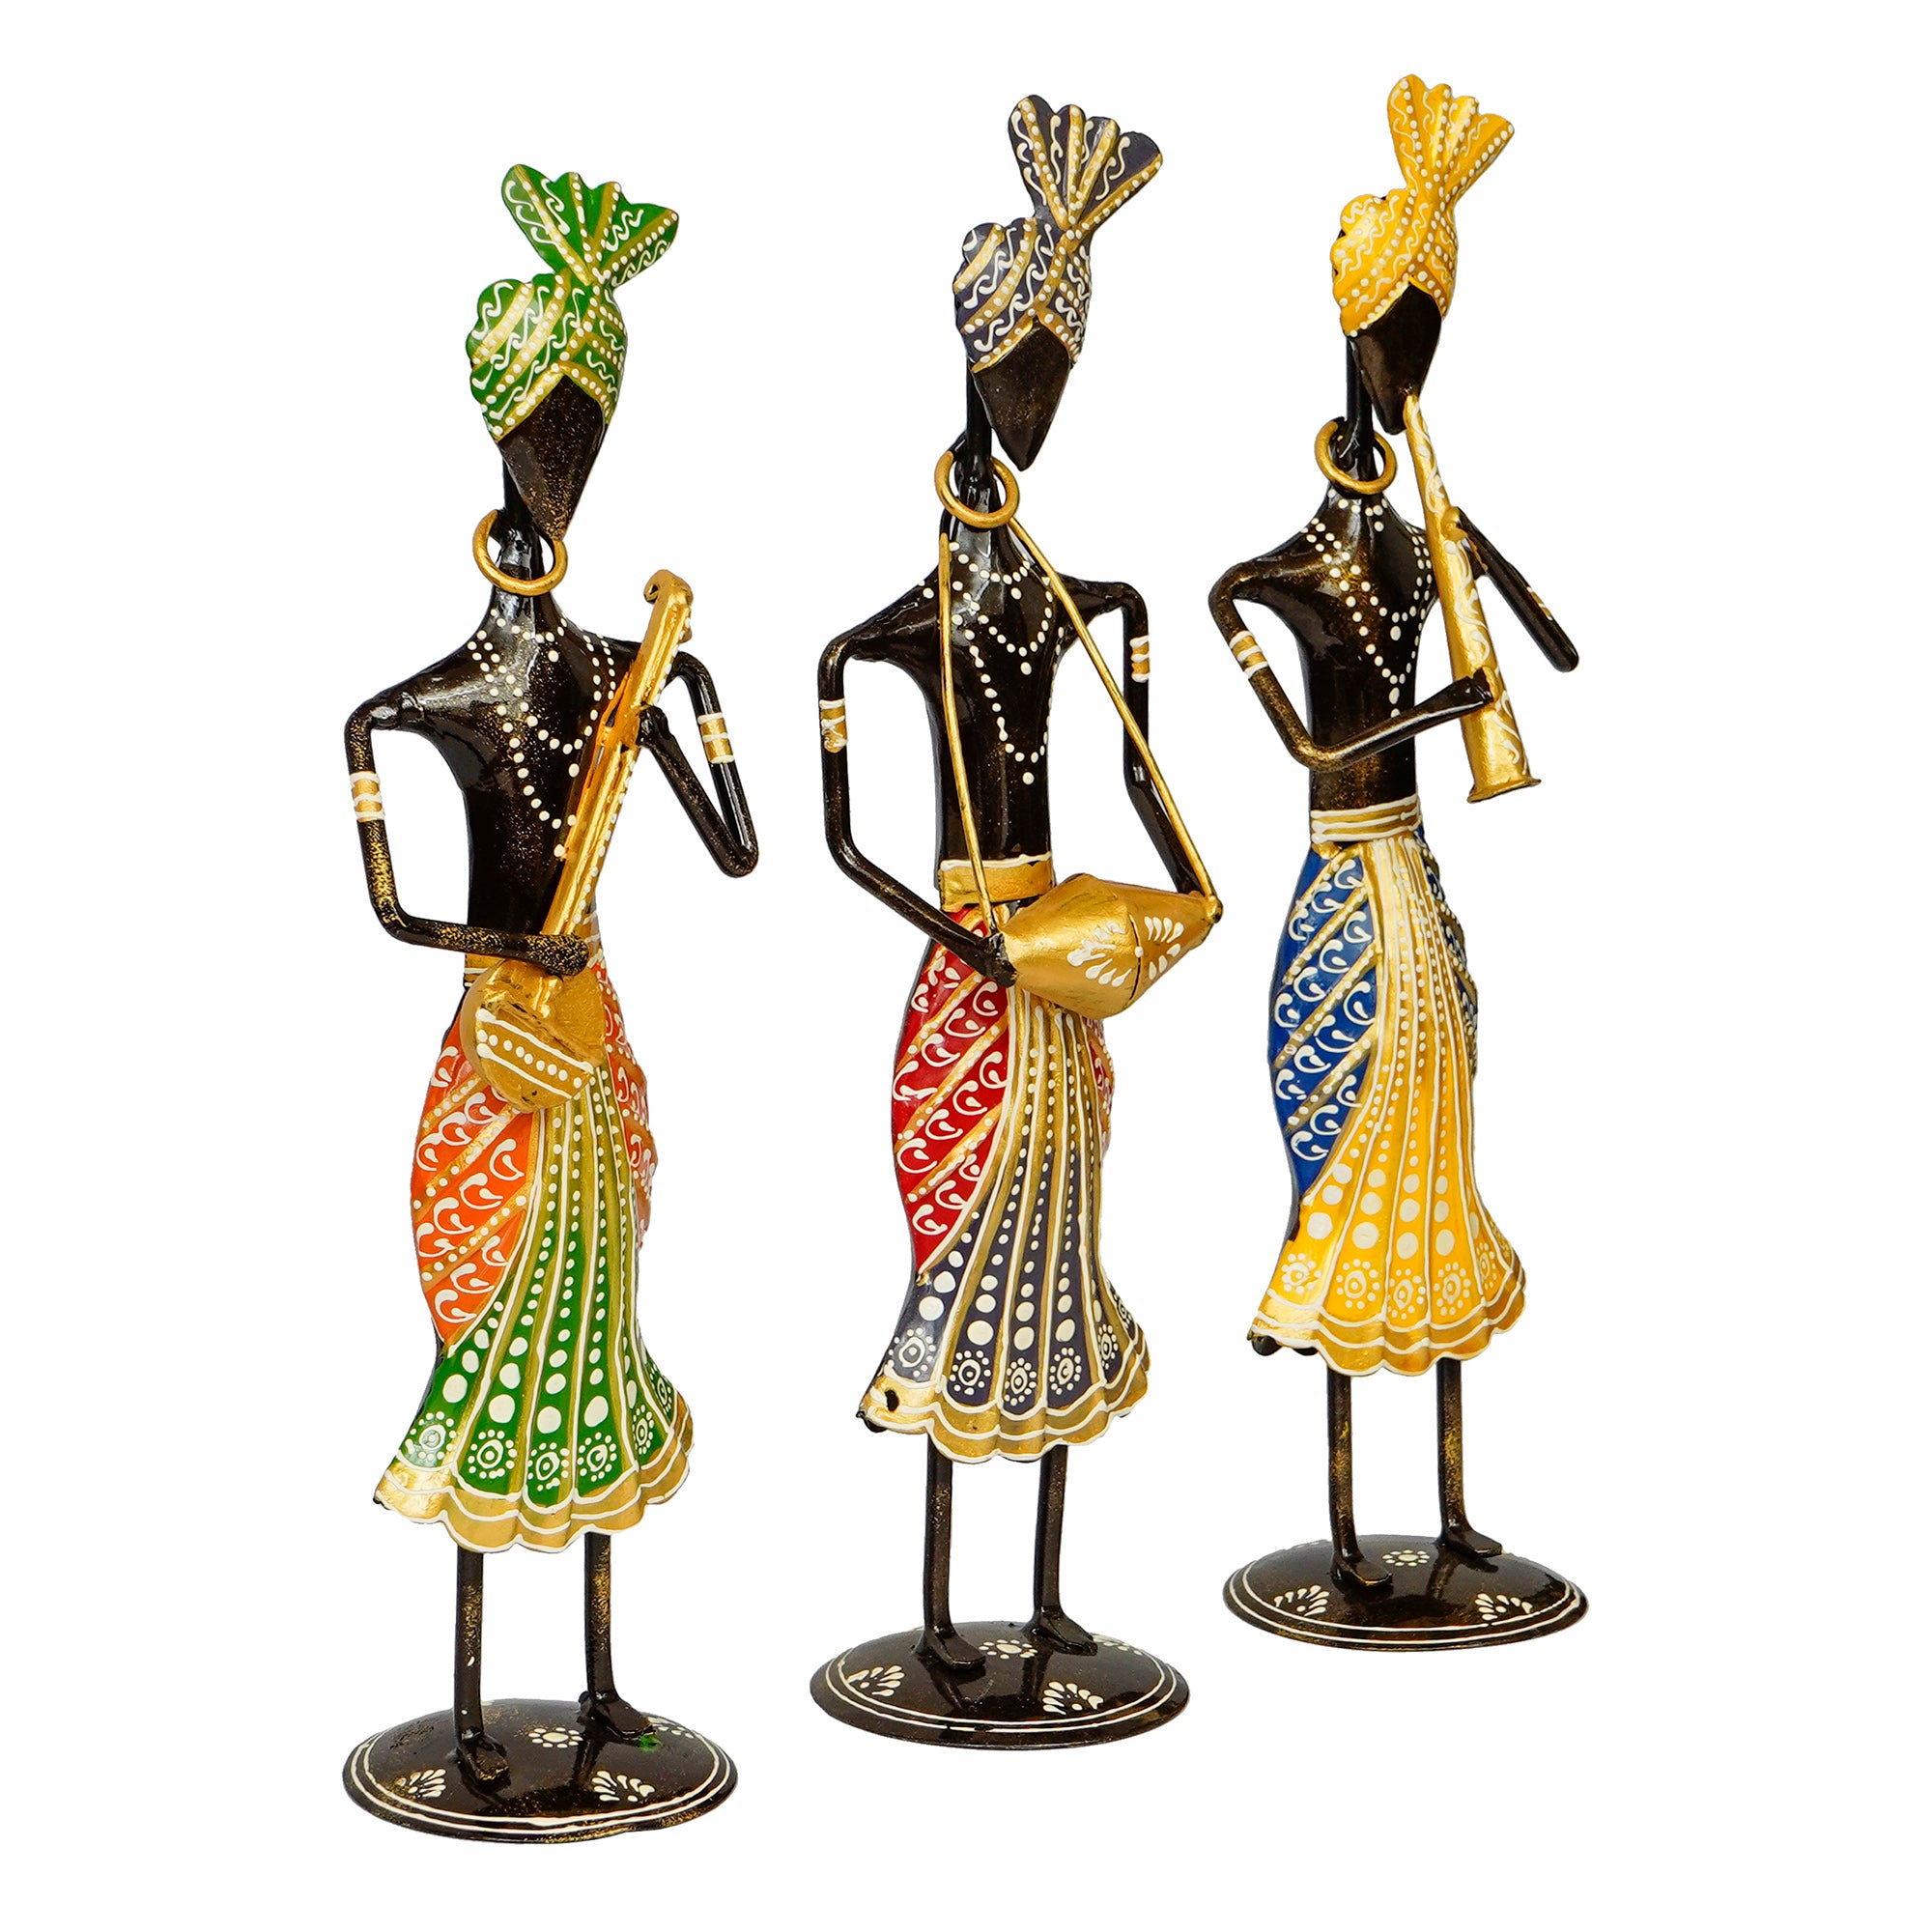 Iron Set of 3 Tribal Man Figurines Playing Banjo, Dholak, Trumpet Musical Instruments Decorative Showpiece 3